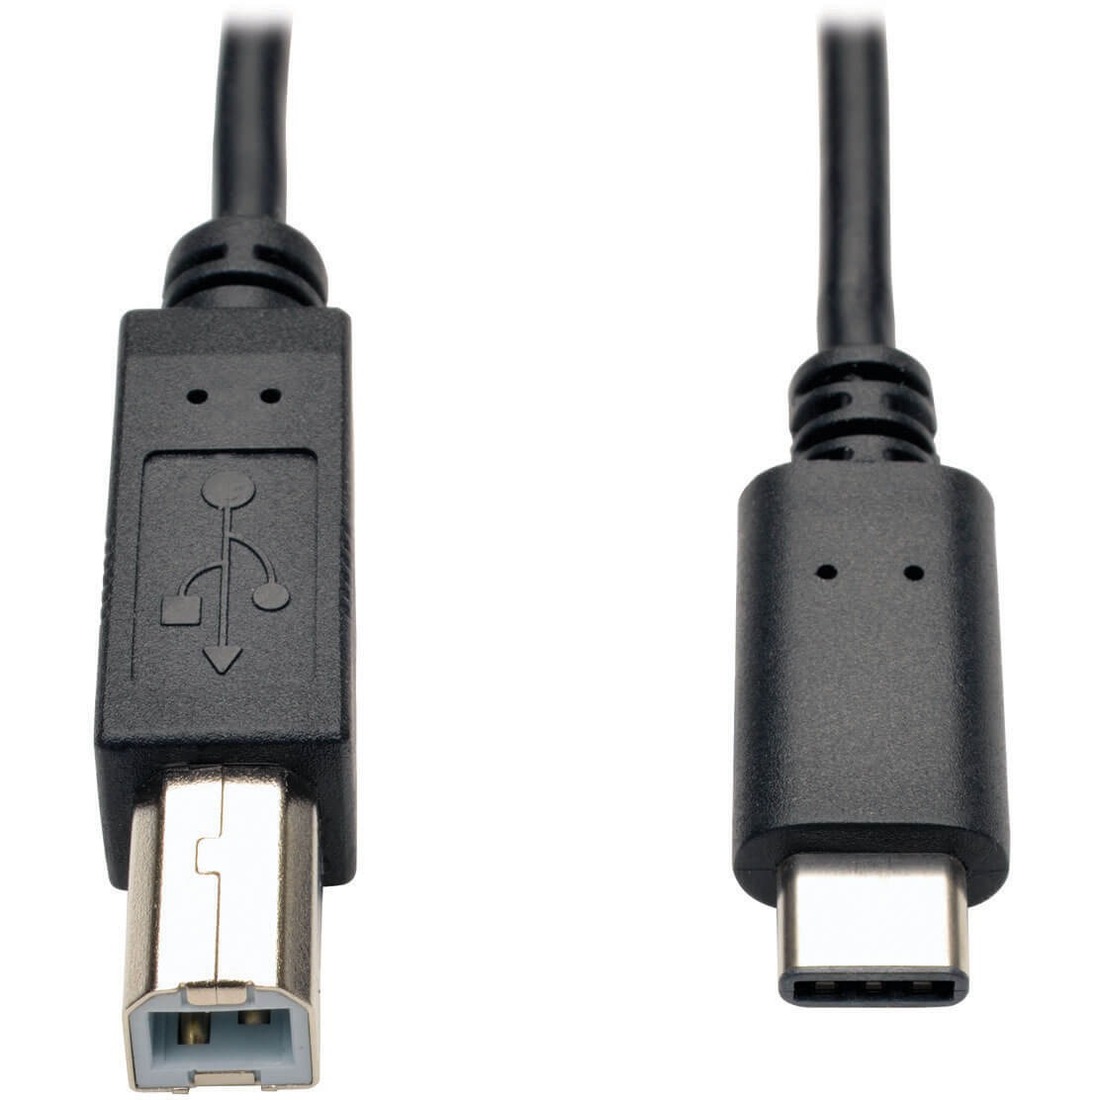 Usb 2.0 high speed. 2.0, Type-c 1.0 Reversible Connector, USB on-the-go. Type USB 2. 0 Hi Speed. Провод Tripp Lite на USB. USB B USB C.